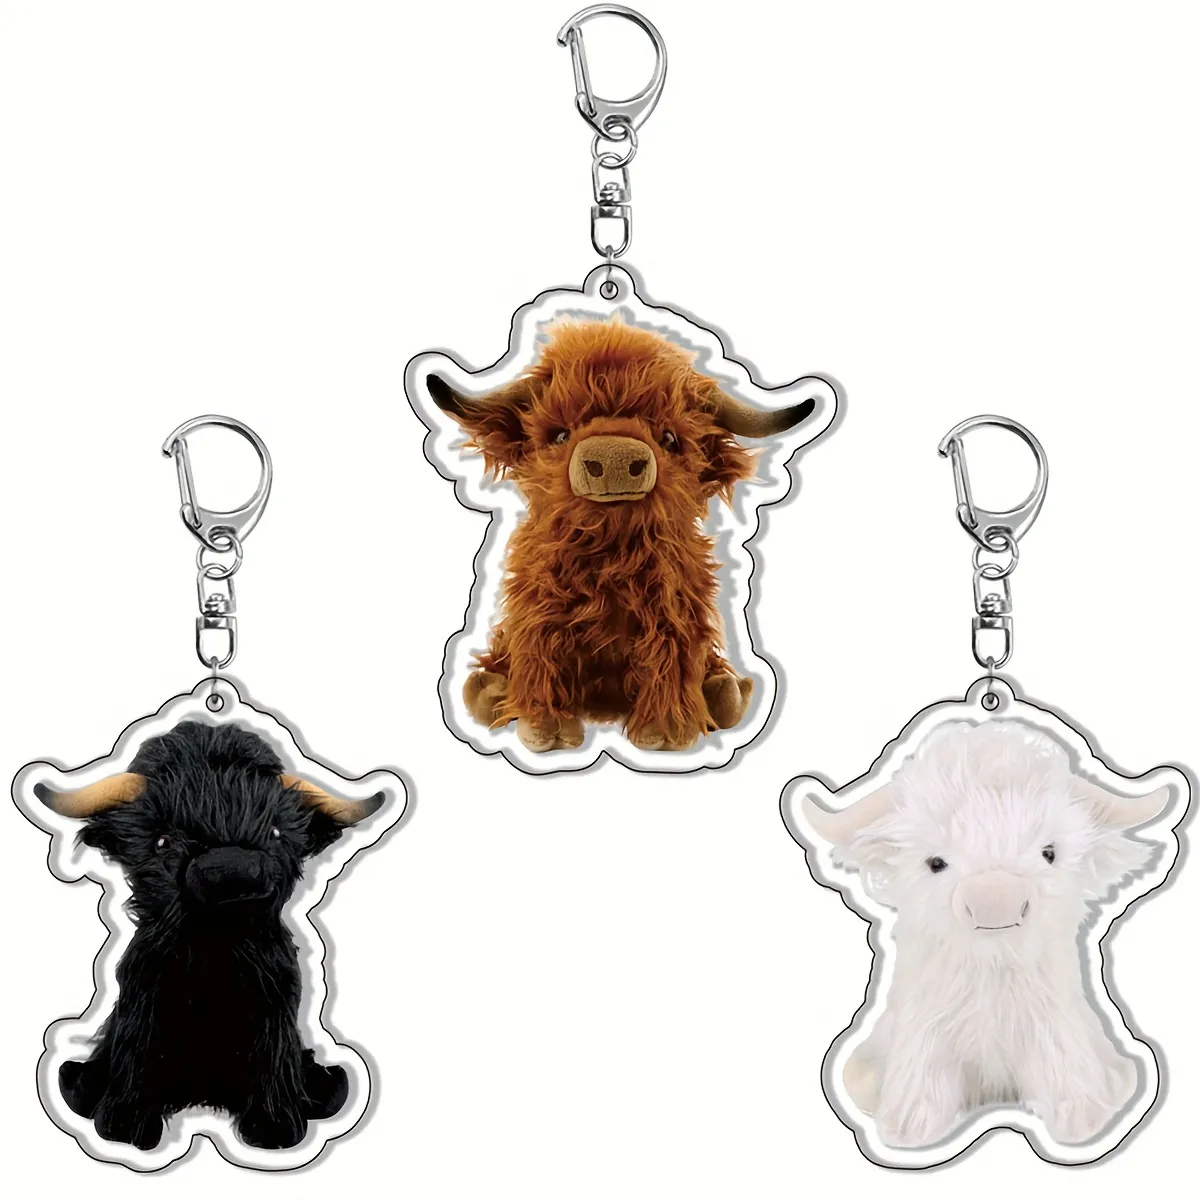 highland cow keychain